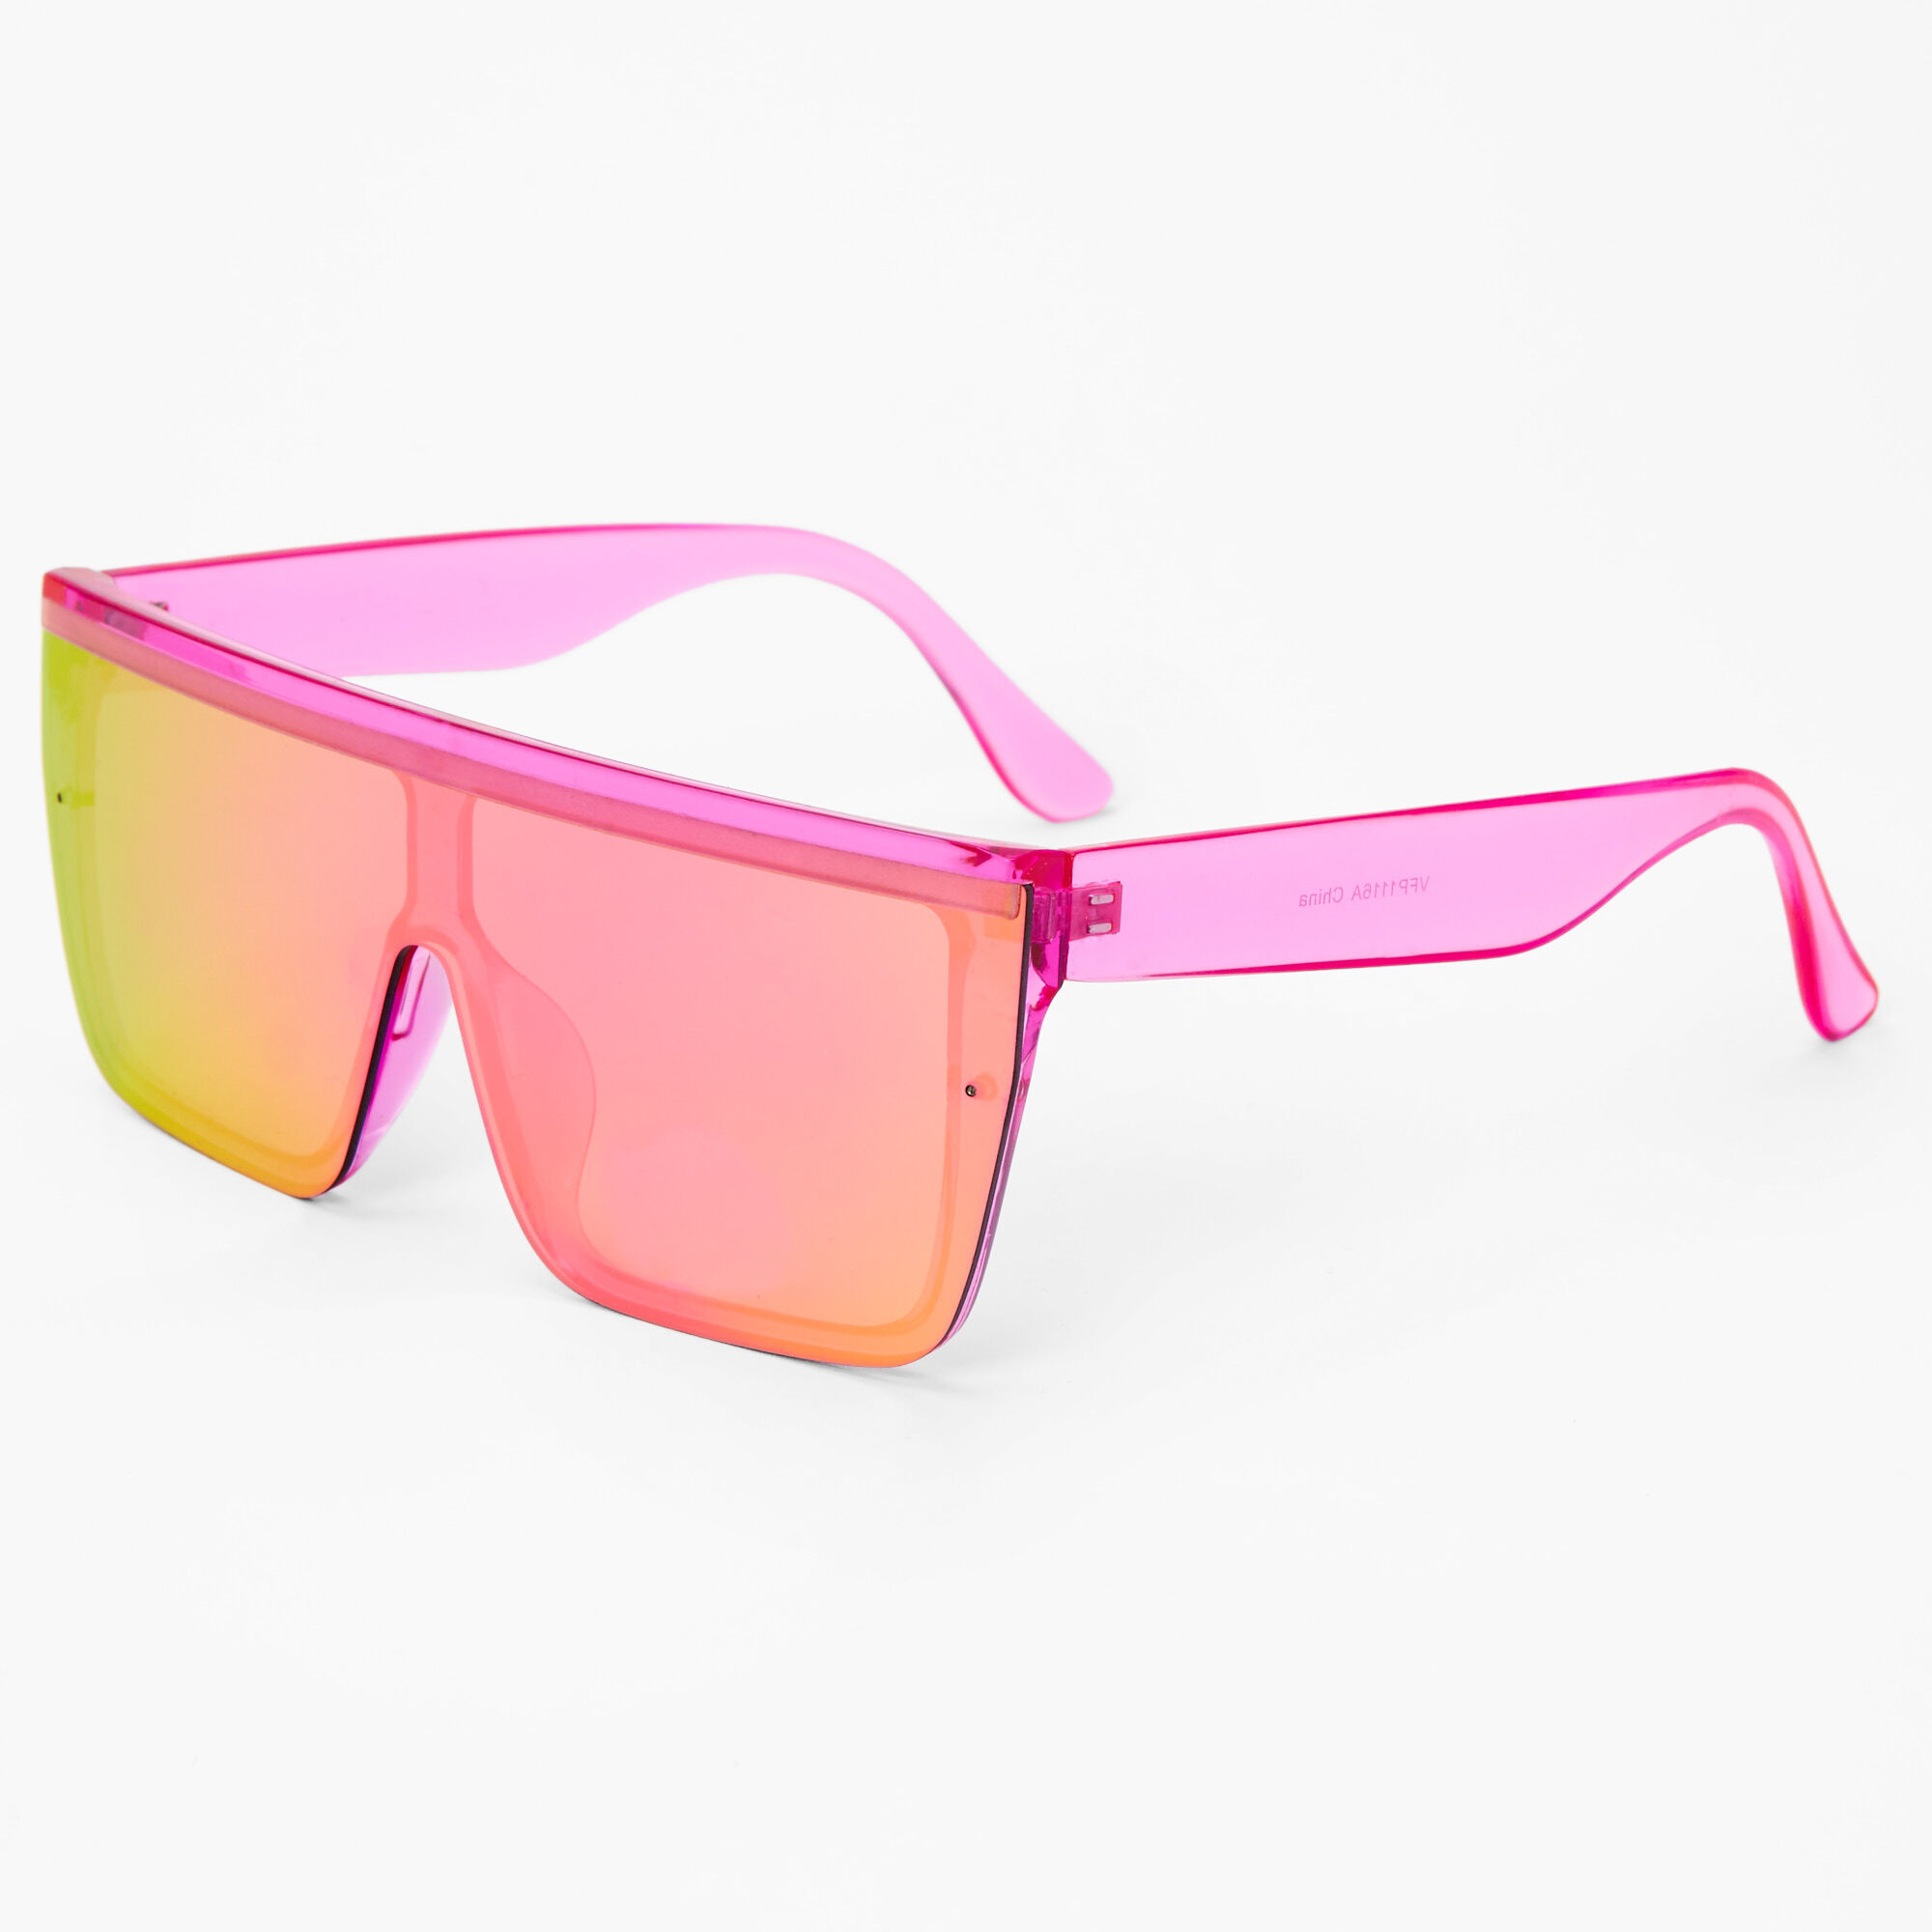 Discount Rawlings Retro Vaporwave Baseball Shield Sunglasses Neon